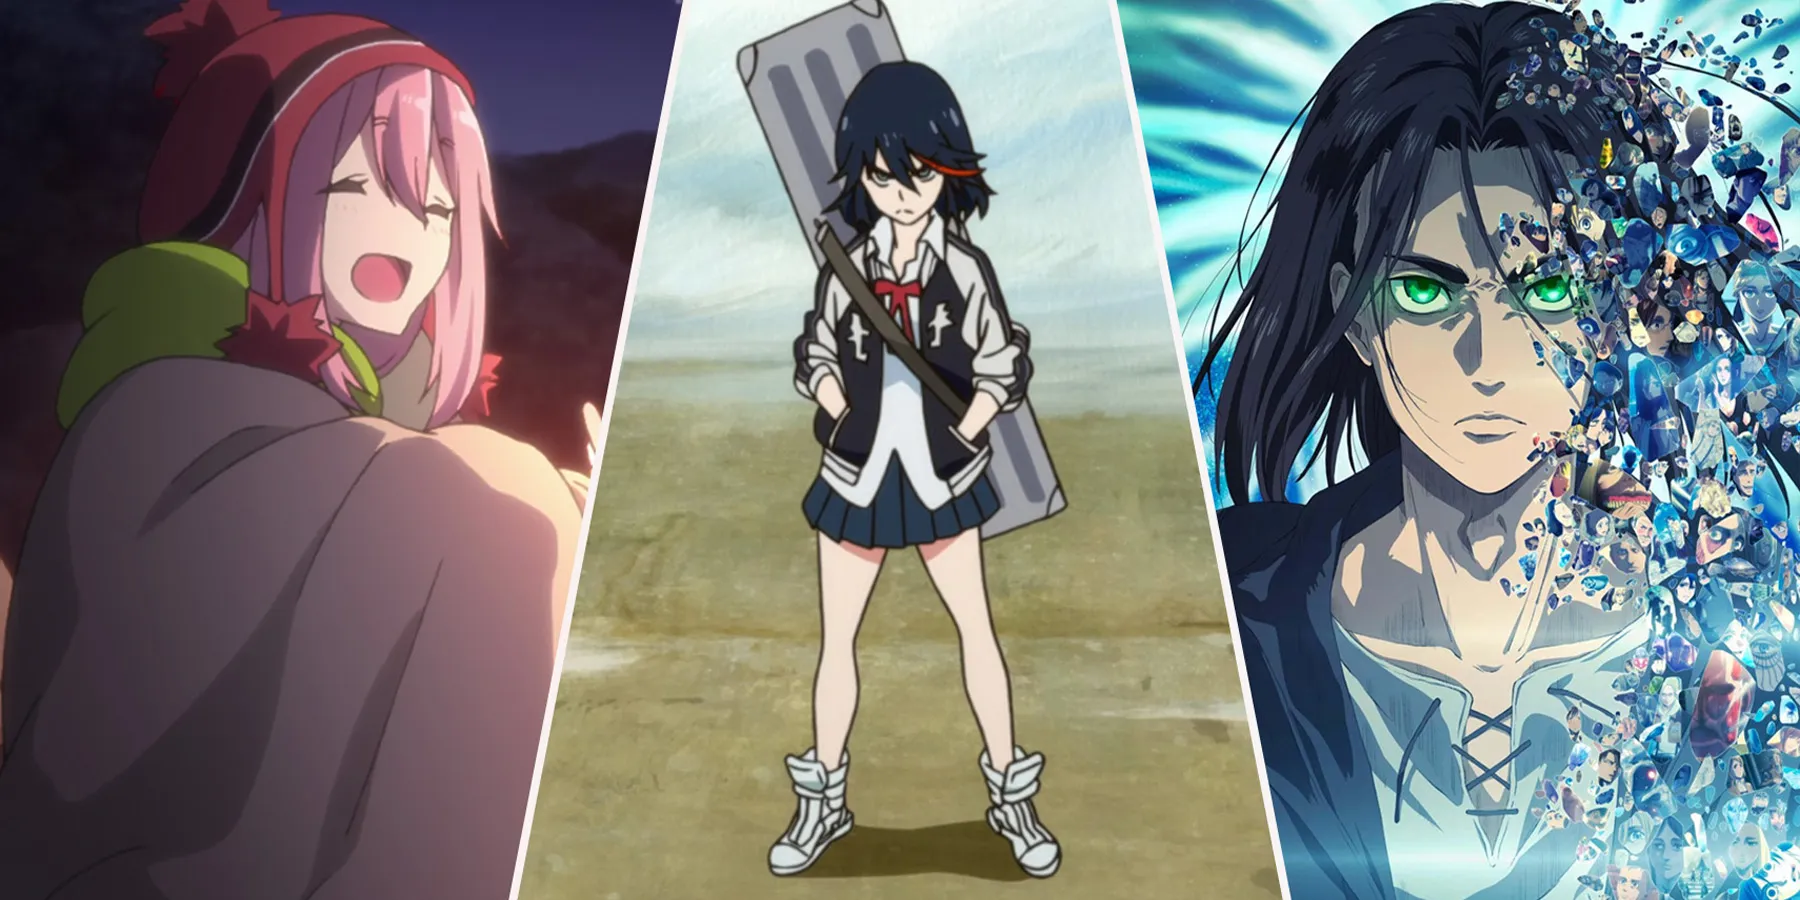 Breaking: Crunchyroll Unlocks Free Streaming for Top Anime Hits - Here’s the Full Scoop!